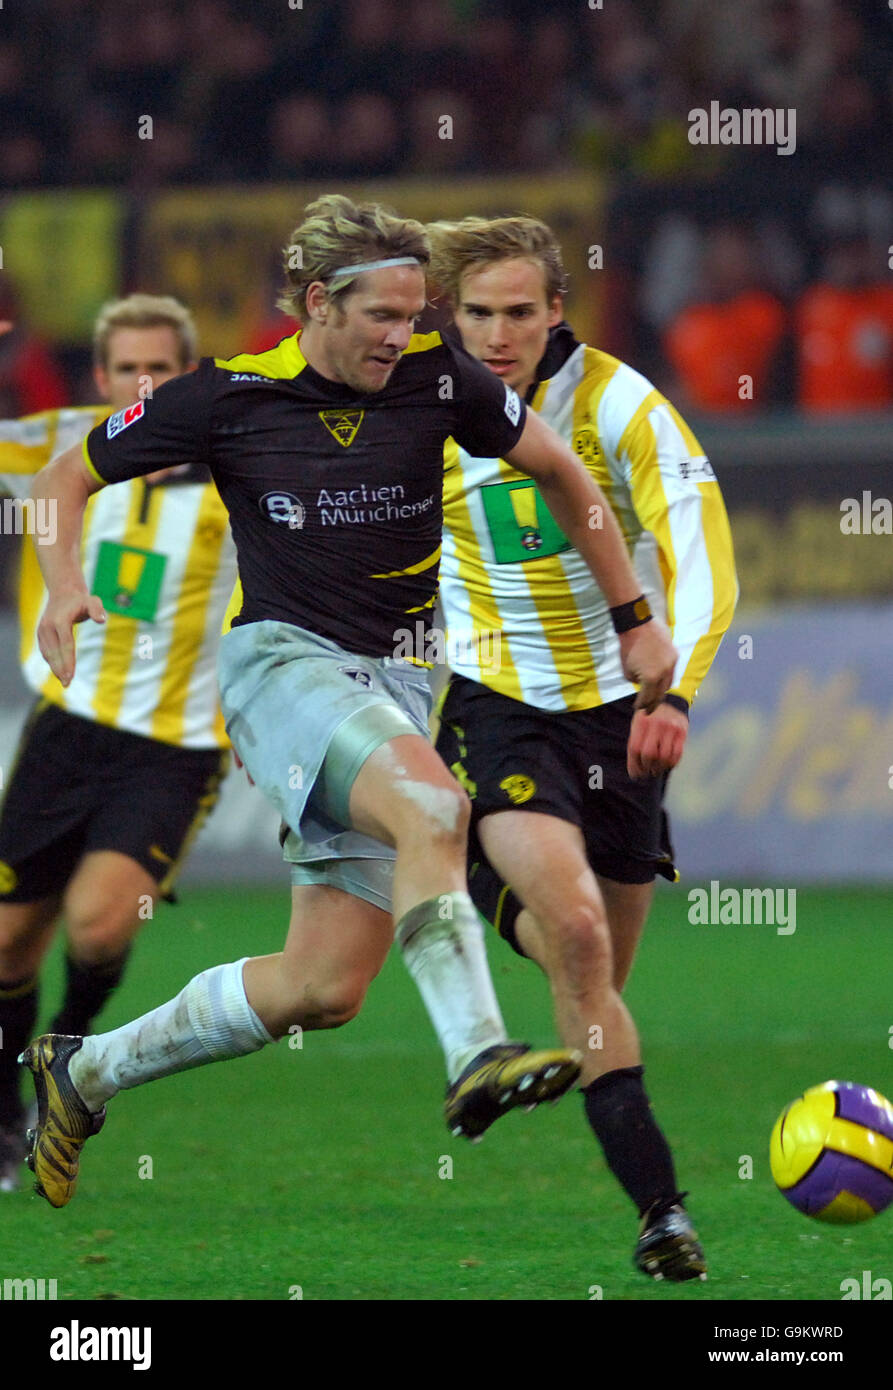 German Soccer - German Bundesliga - Borussia Dortmund v Alemania Aachen - Dortmund. sler in action Stock Photo